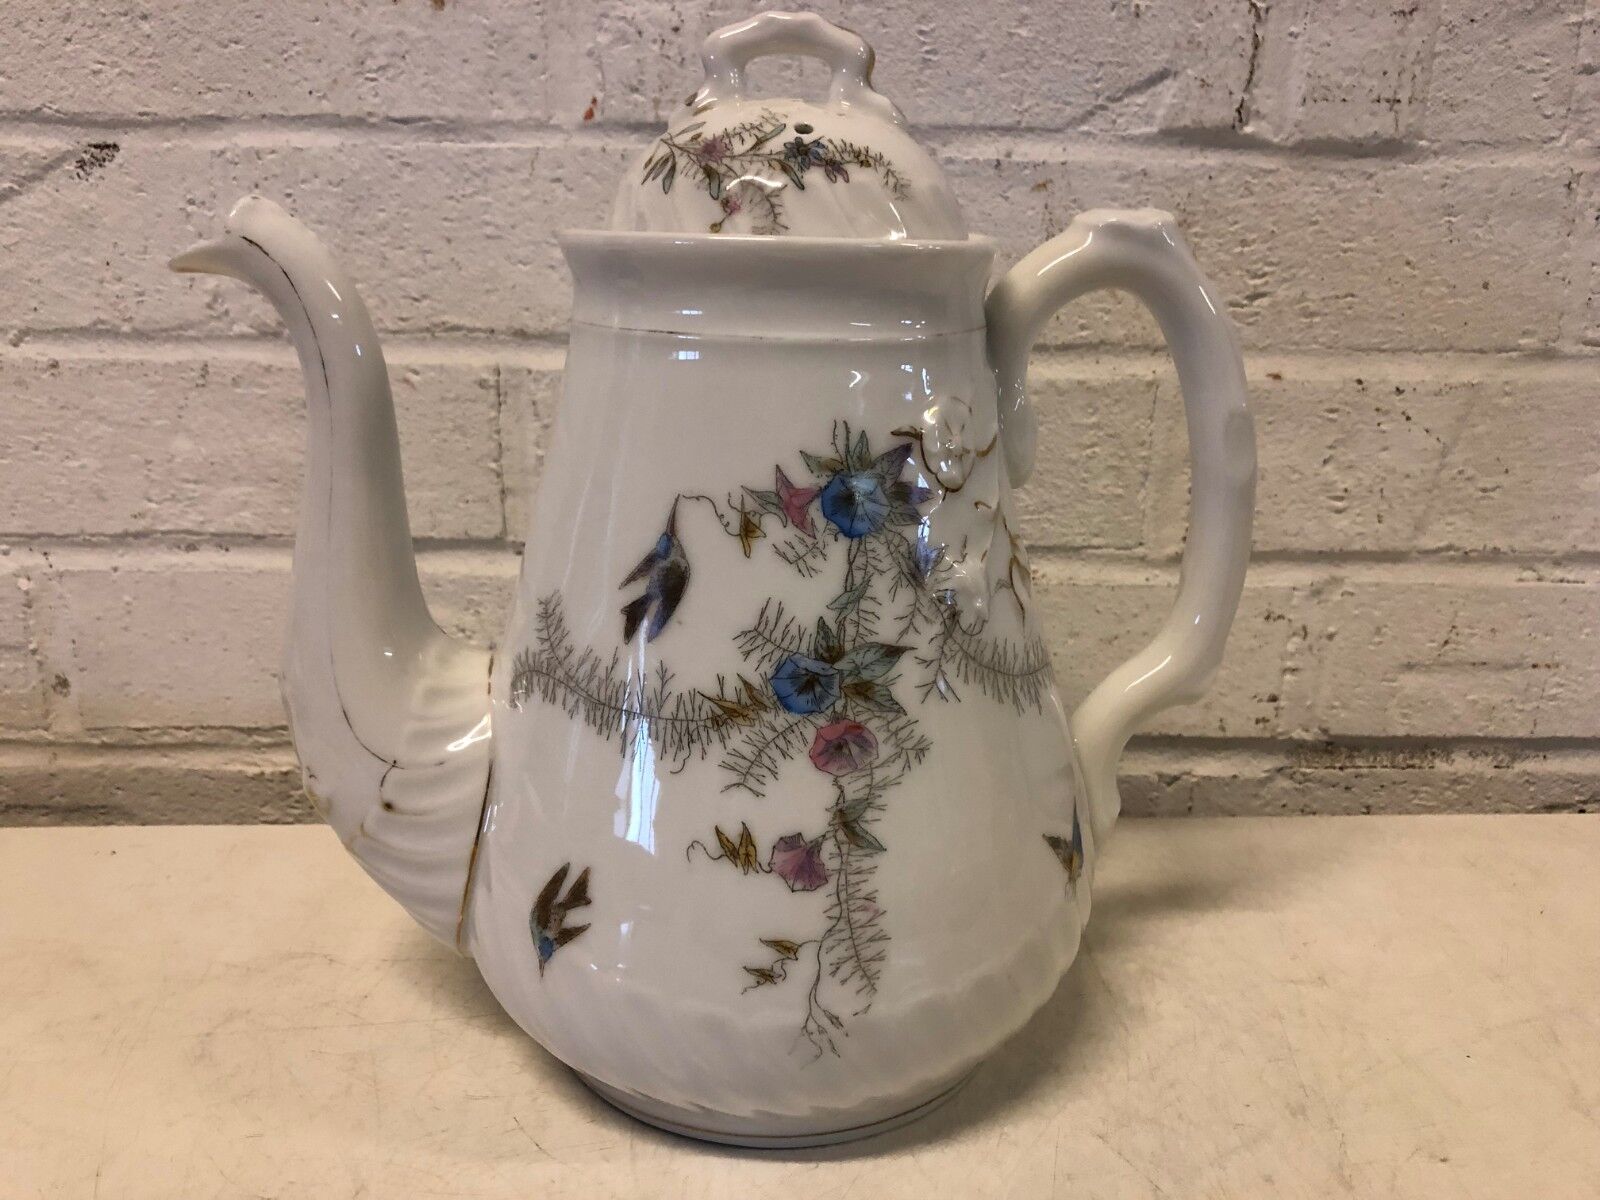 Vintage English Porcelain Teapot with Multicolored Floral Decorations